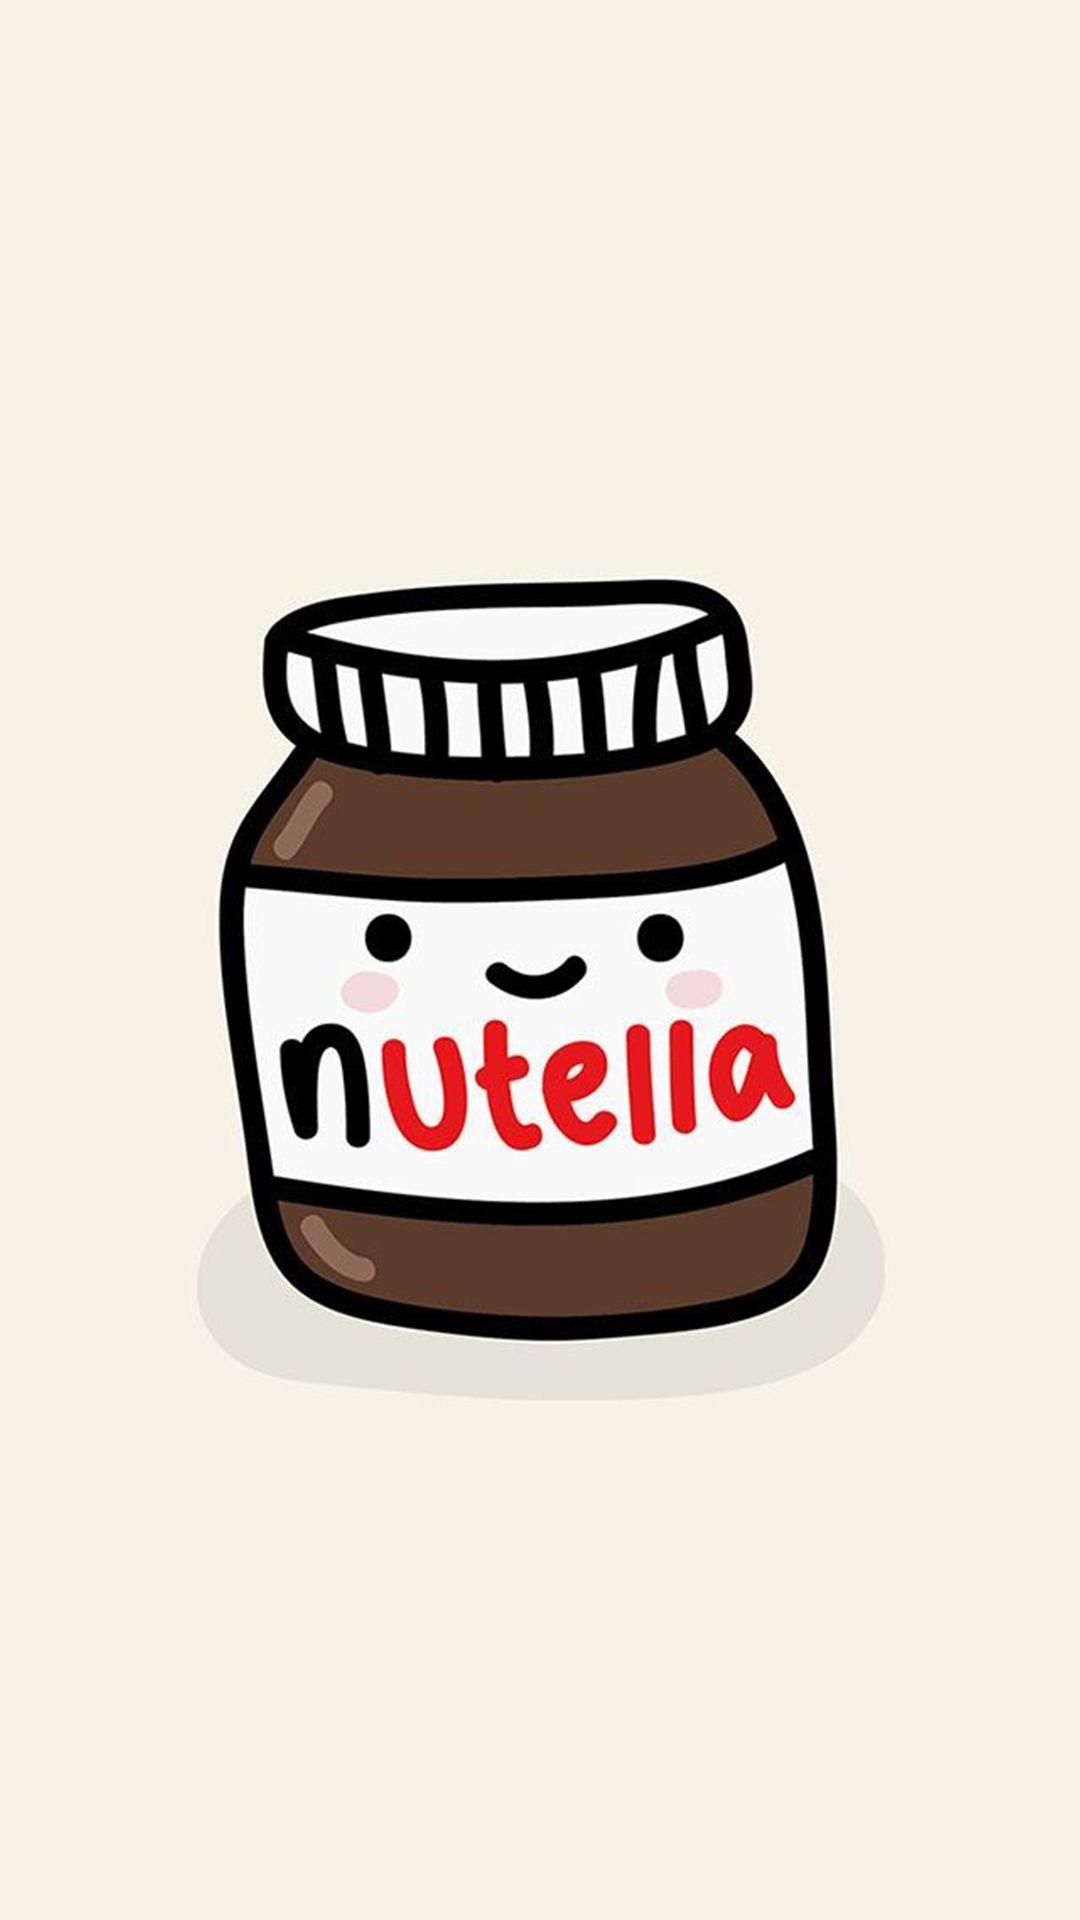 Cute Nutella Jar Illustration Android Wallpaper free download